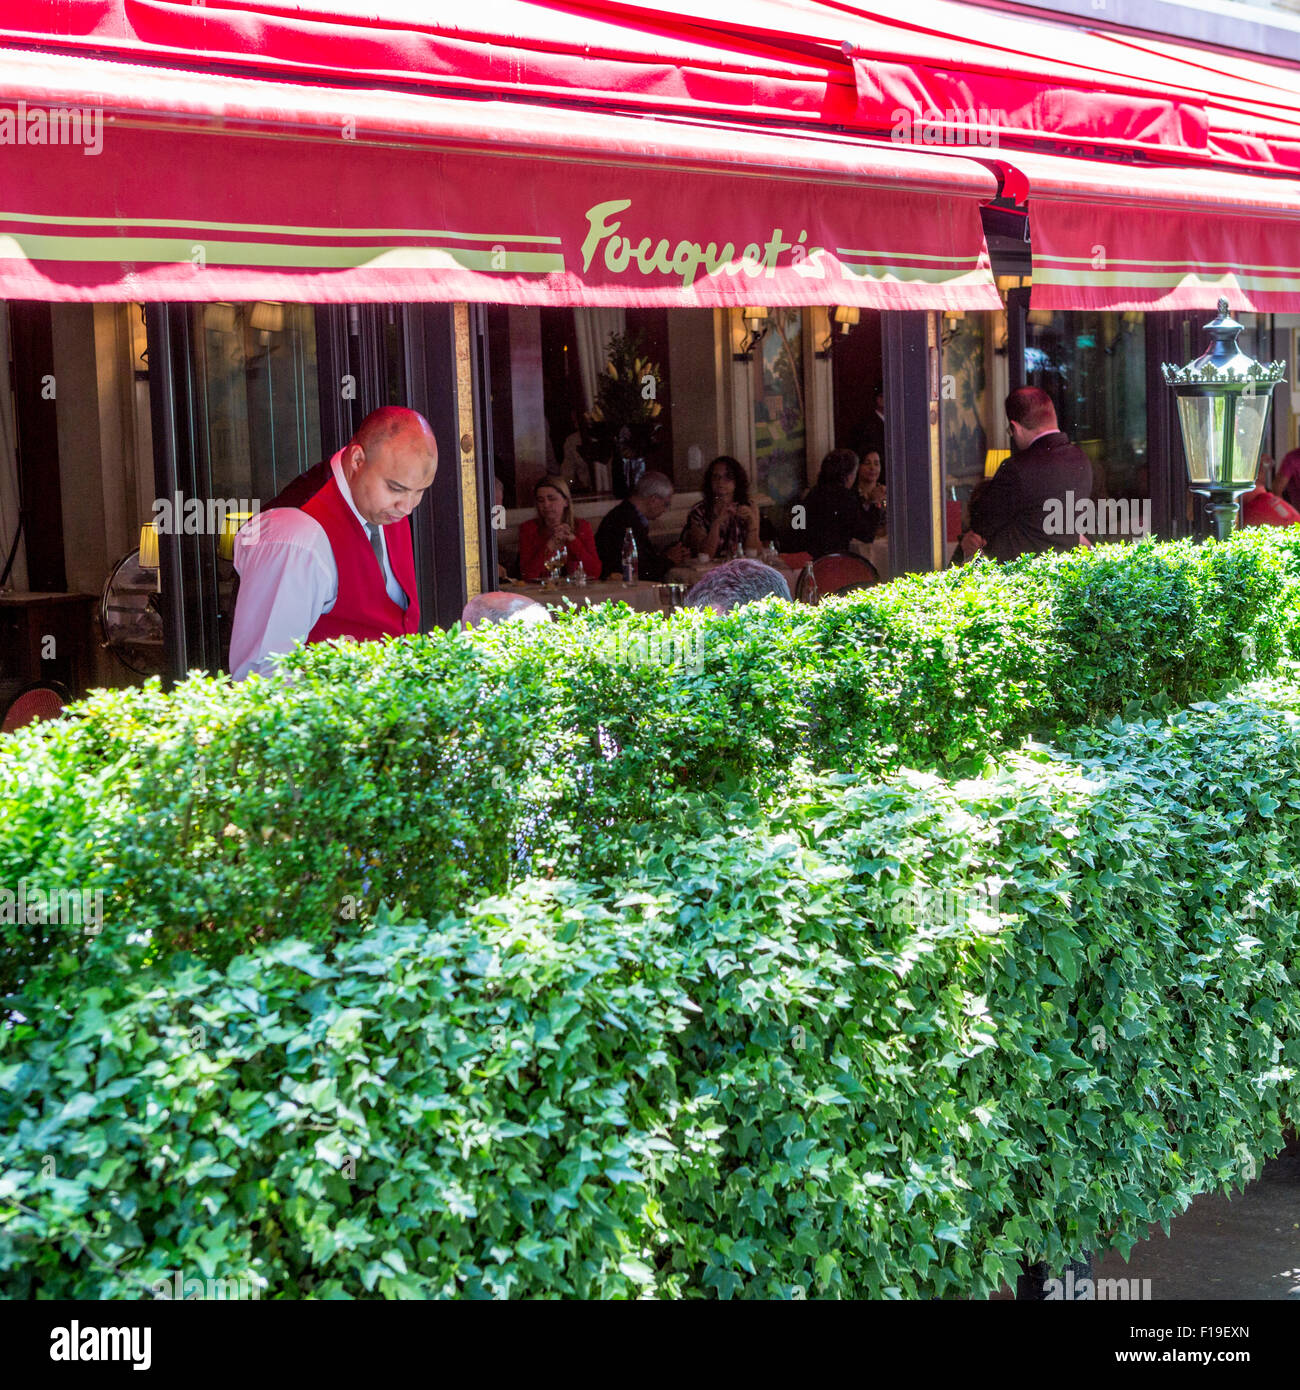 Waiter serves patrons at famed Restaurant Le Fouquet's on the Avenue des Champs Elysees in Paris Stock Photo